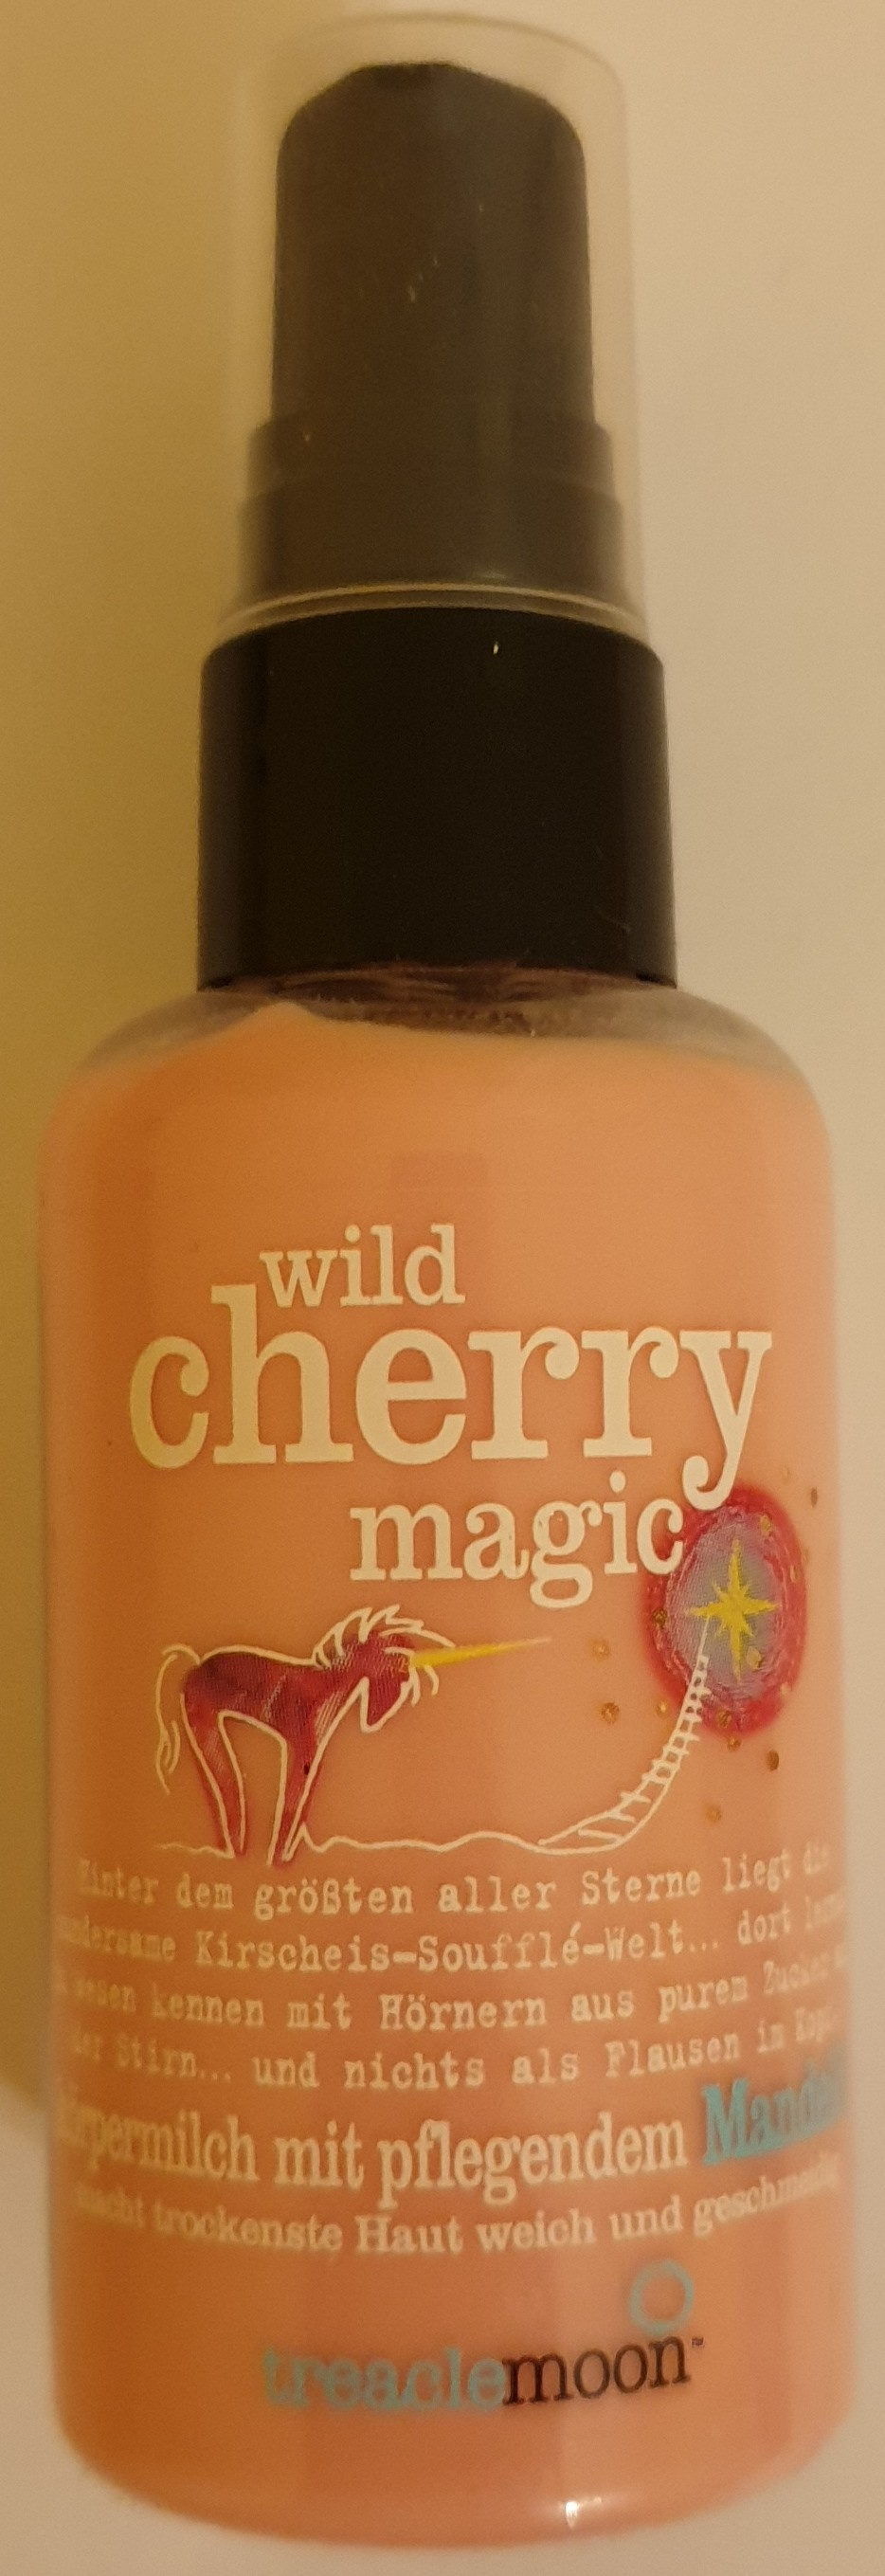 wild cherry magic - Produkt - de